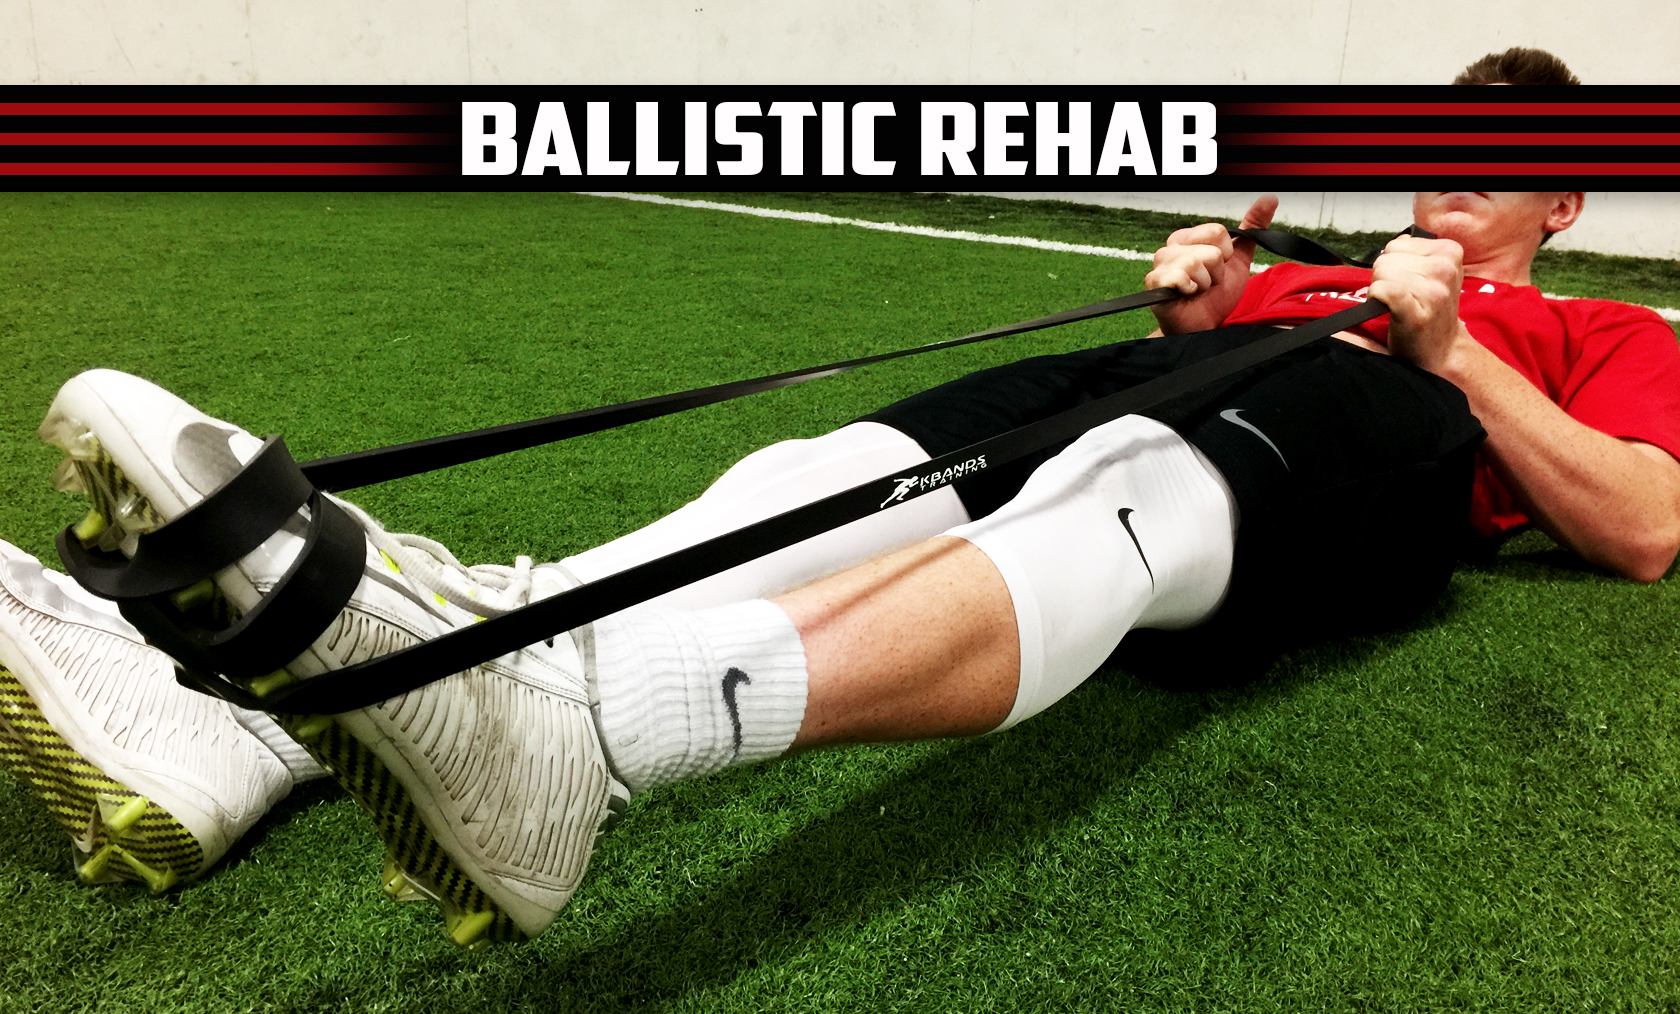 Ballistic Rehab Digital Trainer